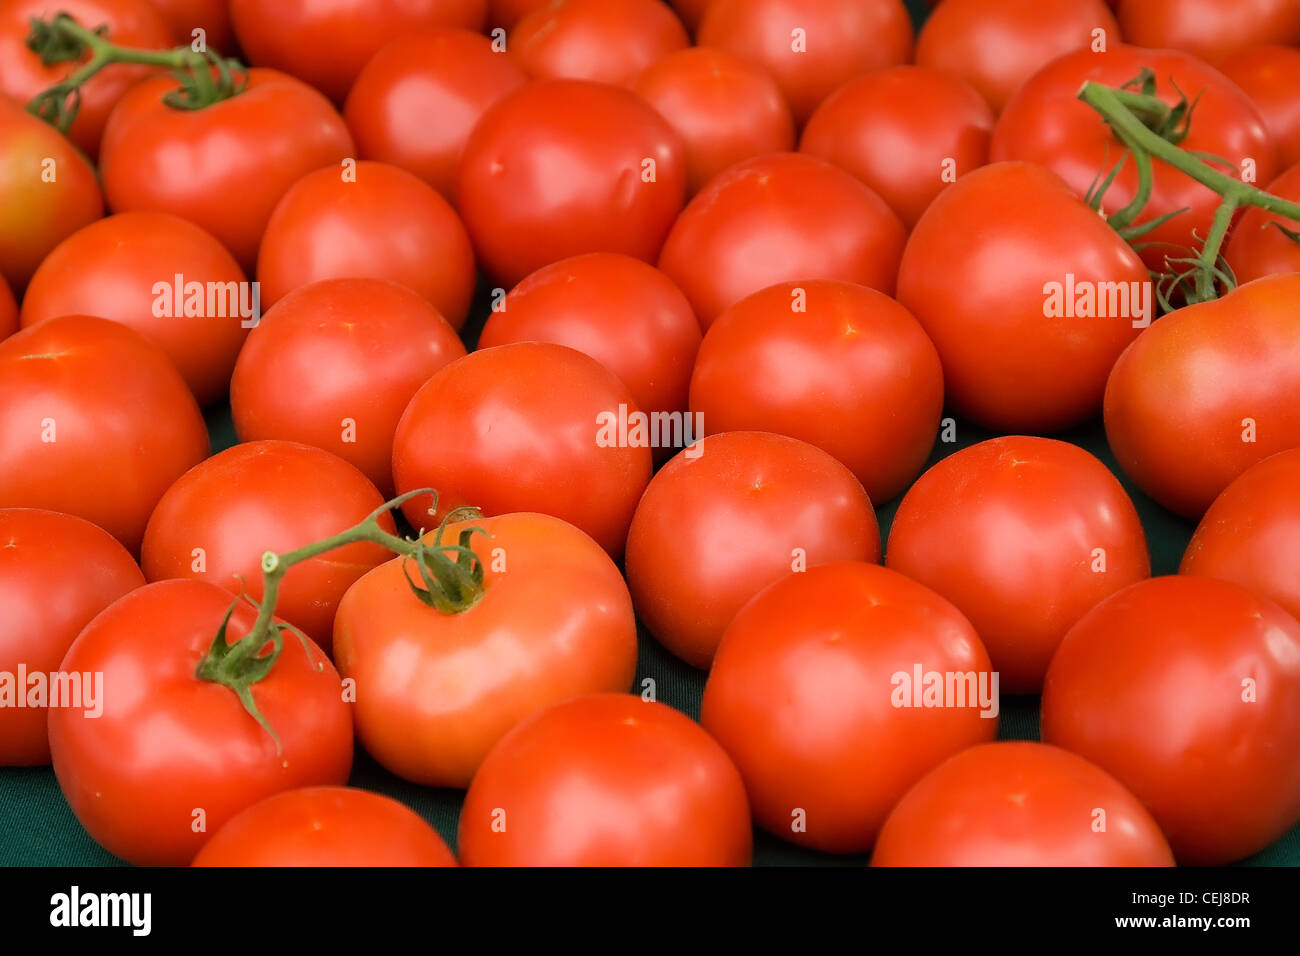 Agriculture - Vine ripened fresh market tomatoes / Stockton, San Joaquin County, California, USA. Stock Photo